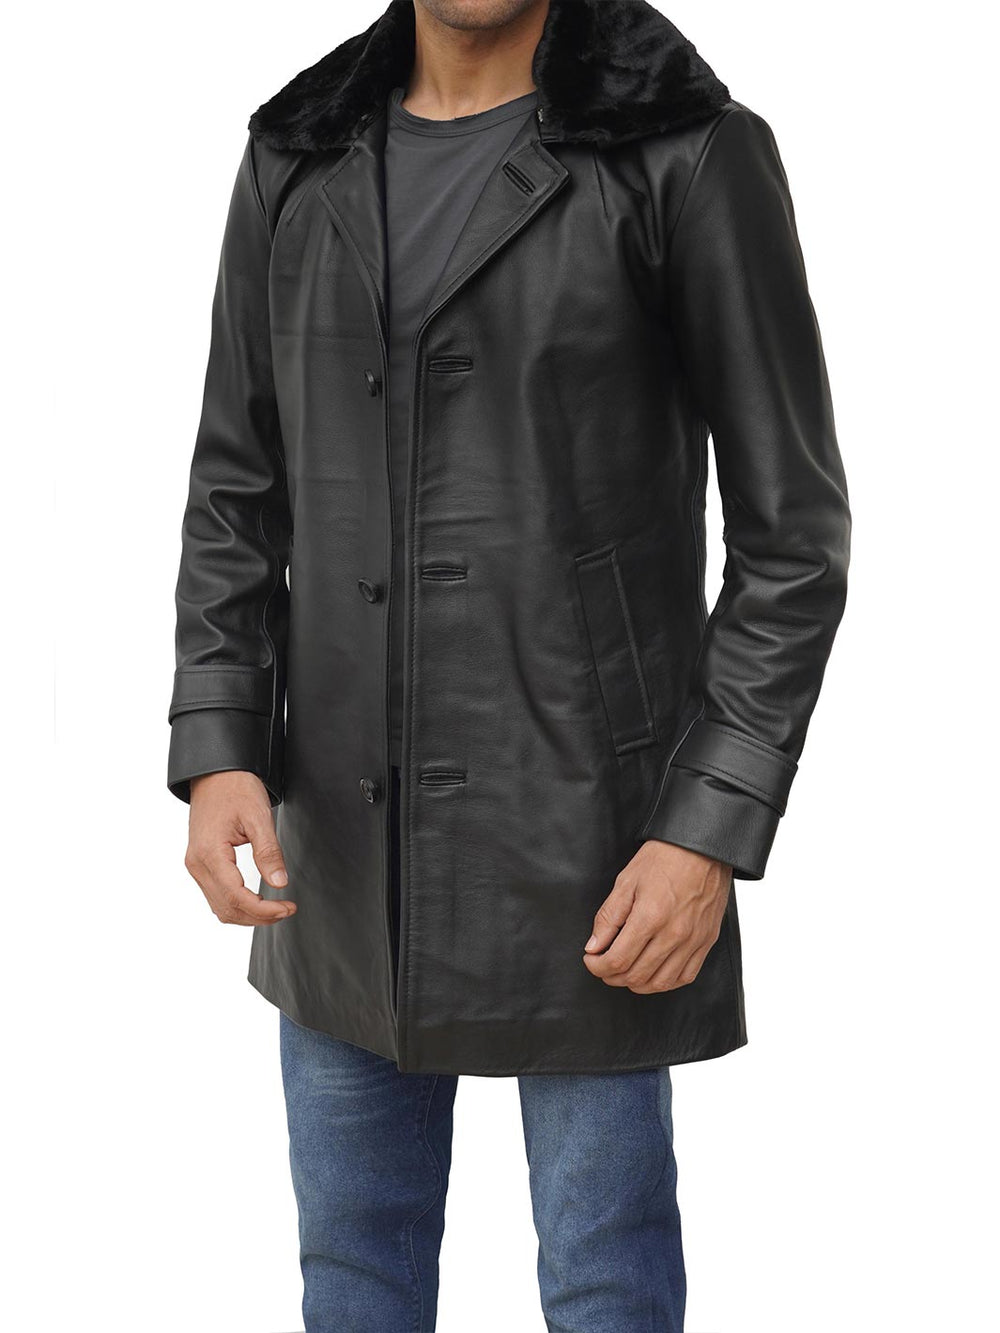 Mens Black leather coat